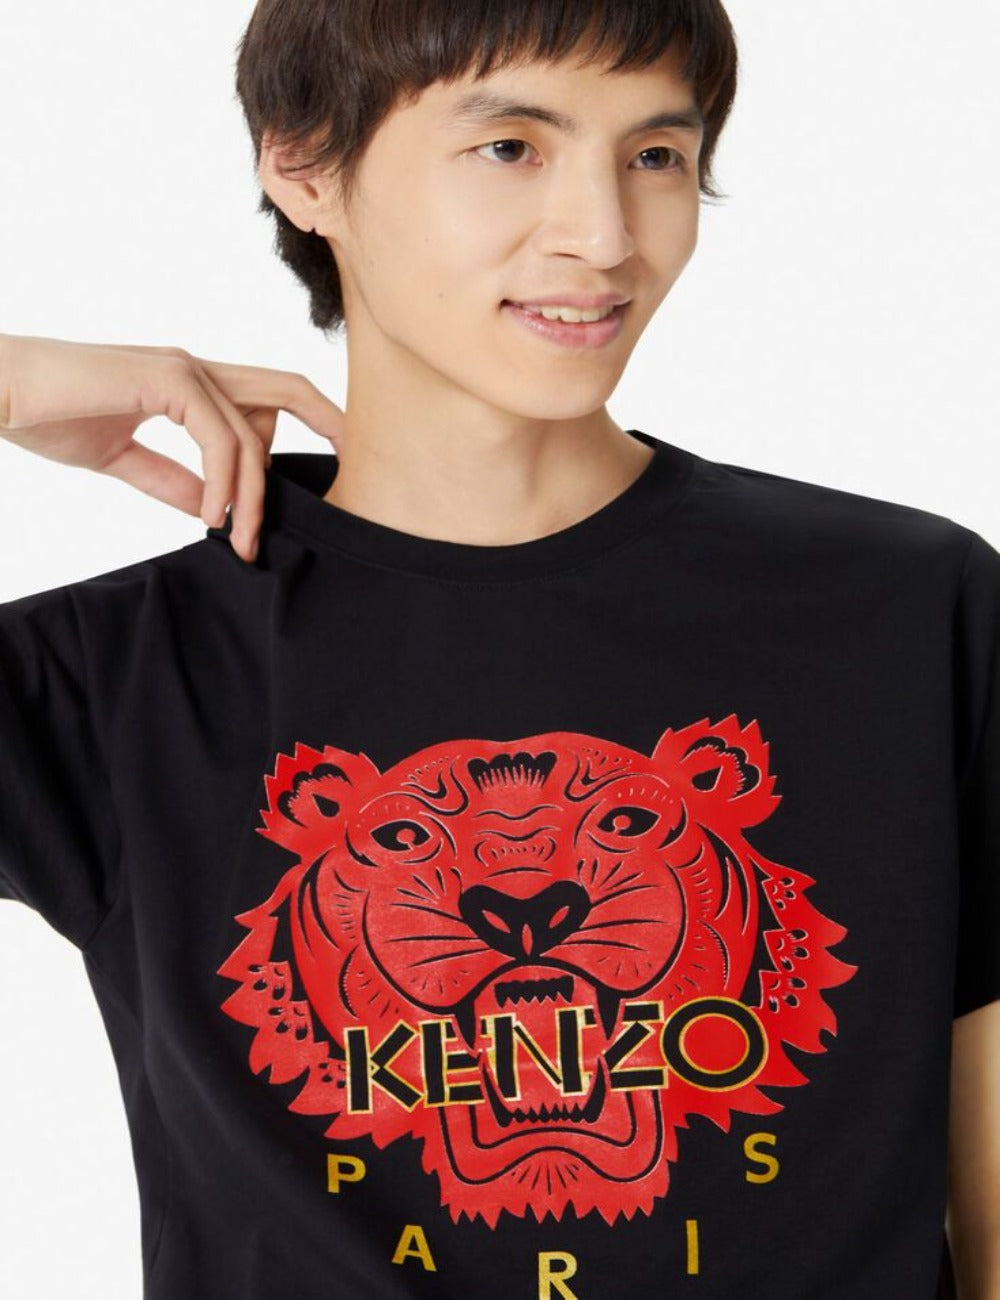 Kenzo Red Tiger (Black Word) Logo T-Shirt The KL